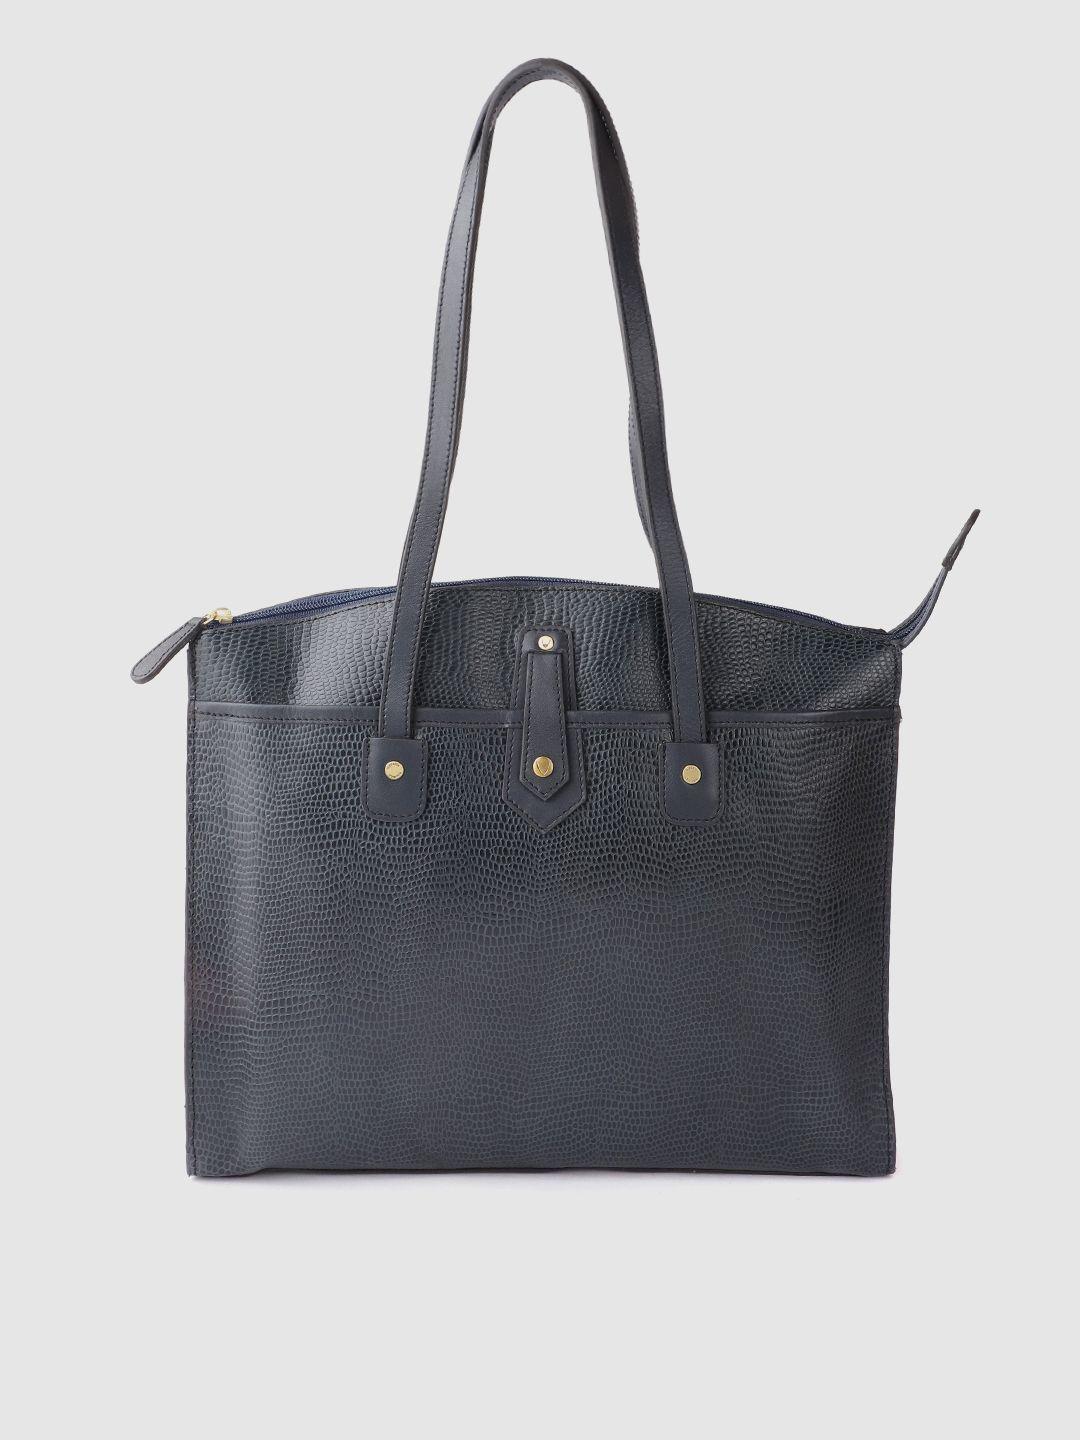 hidesign navy blue handcrafted animal textured leather structured shoulder bag